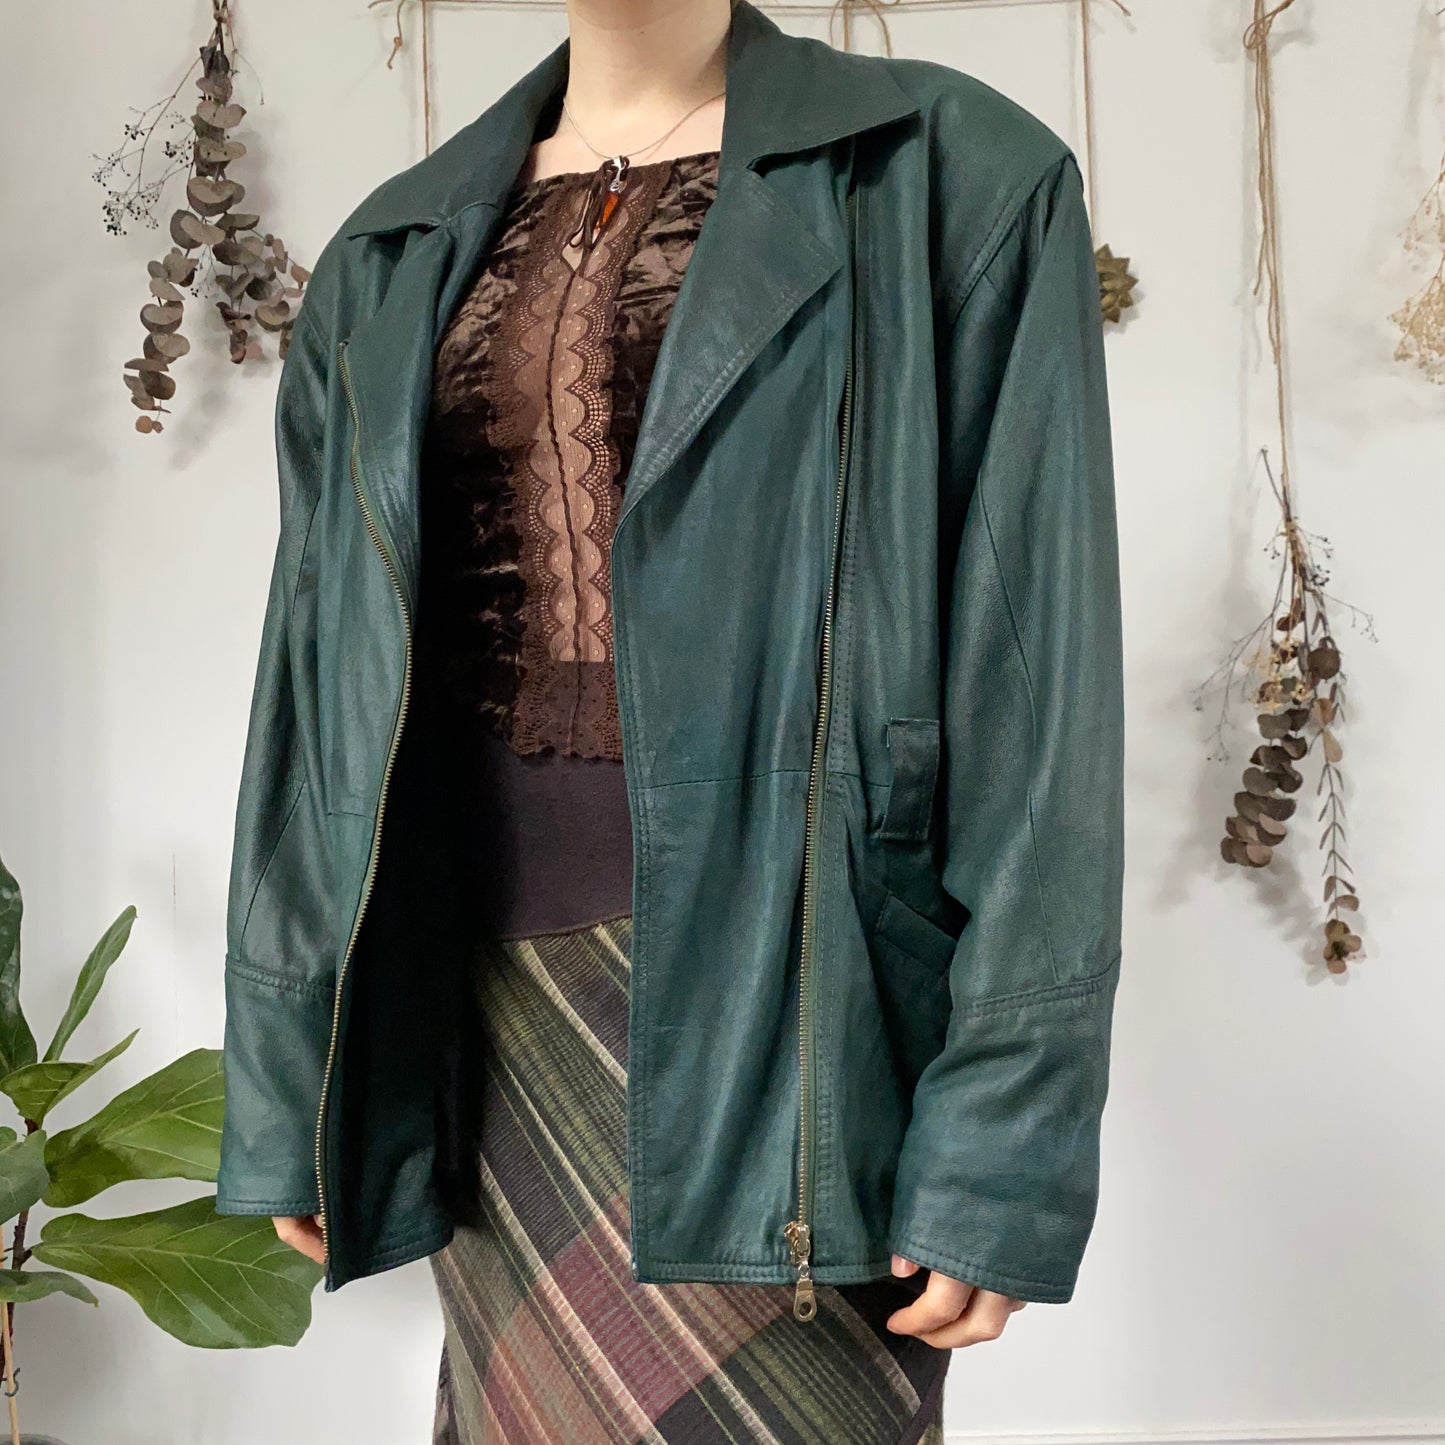 Green leather jacket - size L/XL